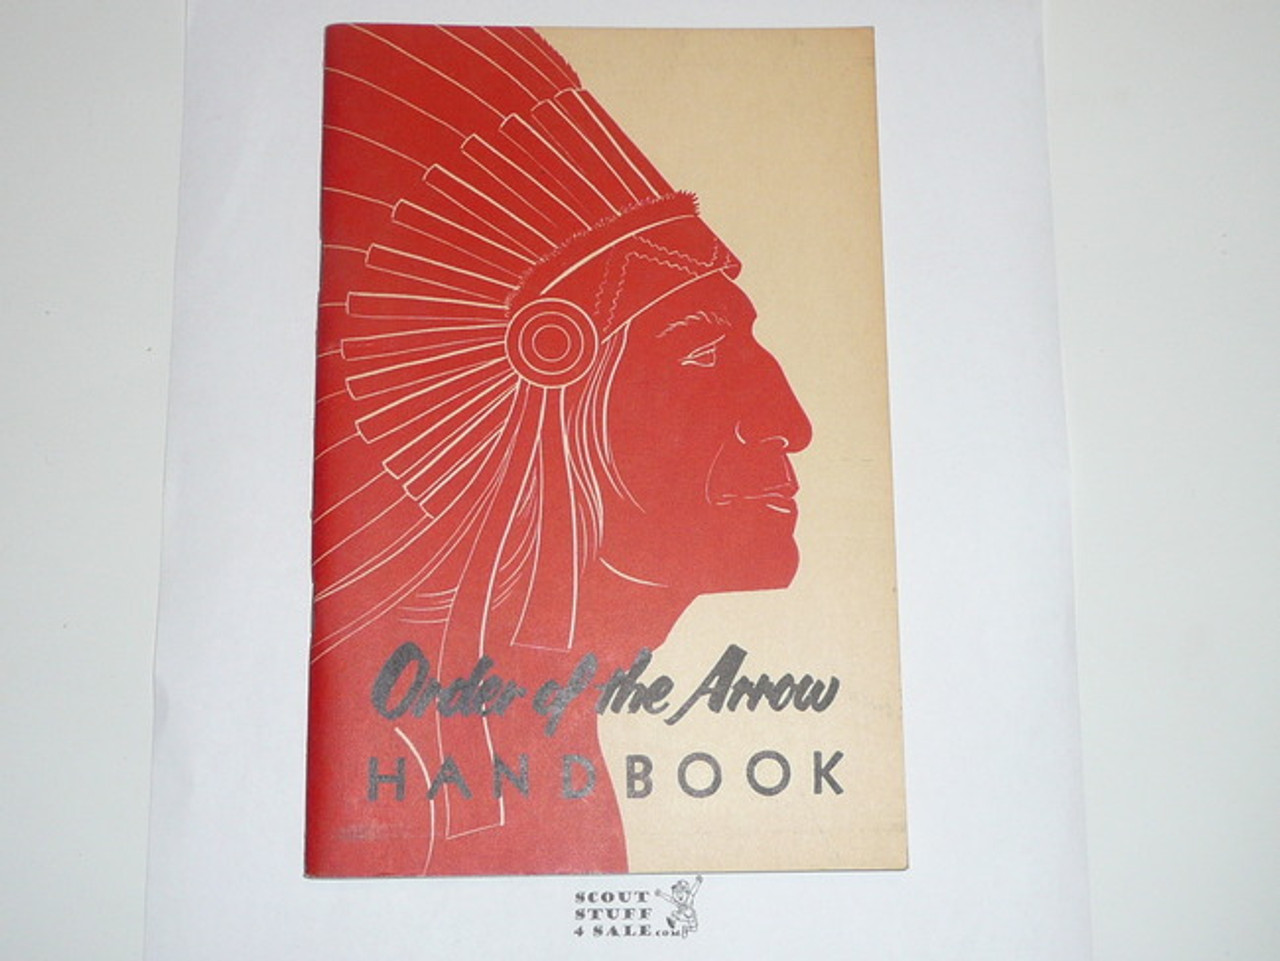 1959 Order of the Arrow Handbook, 3-59 Printing